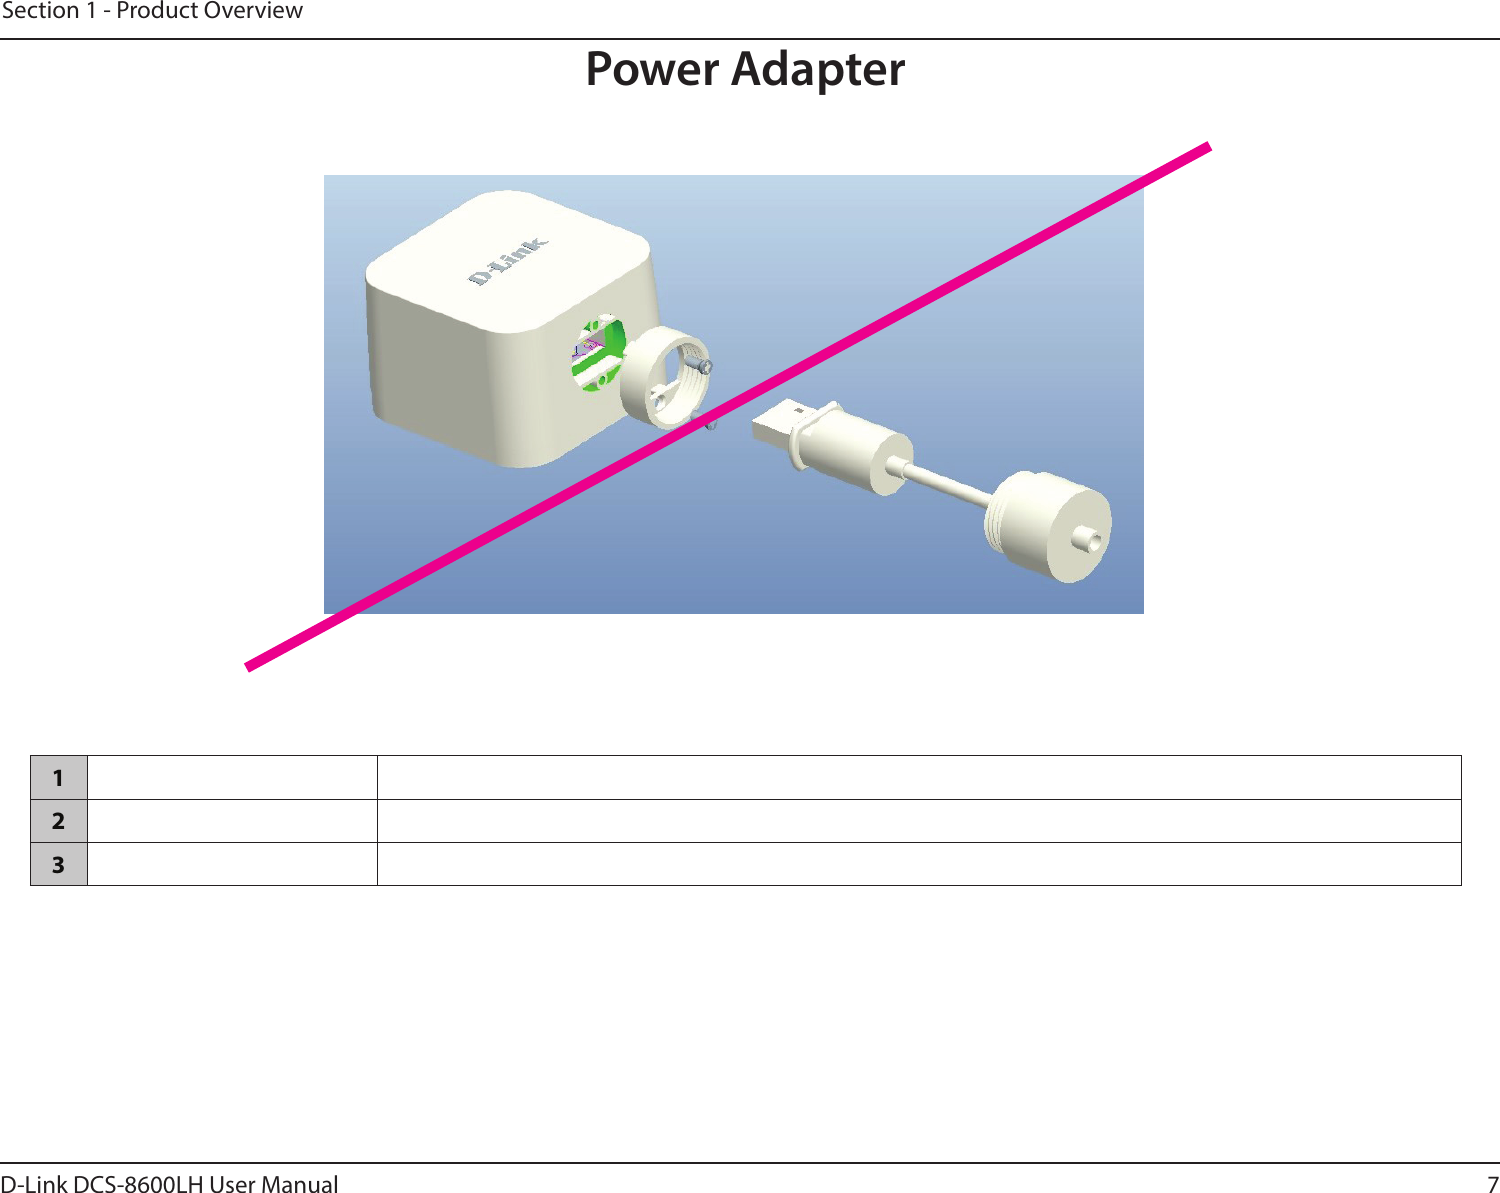 7D-Link DCS-8600LH User ManualSection 1 - Product OverviewPower Adapter123